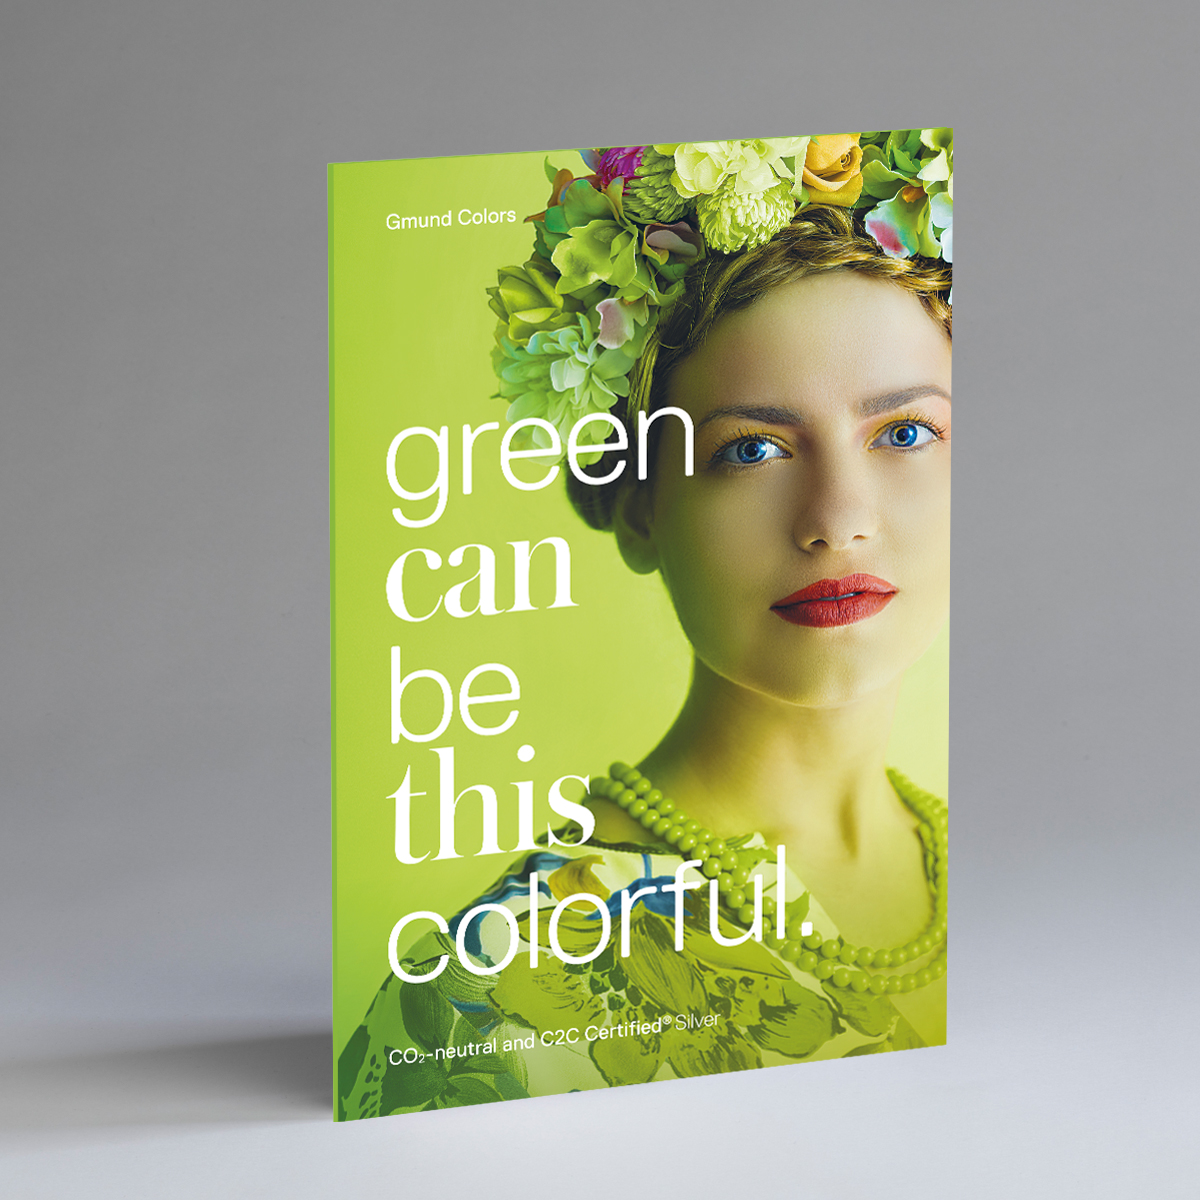 Gmund Colors Matt - Brochure Gmund Colors Sustainability English